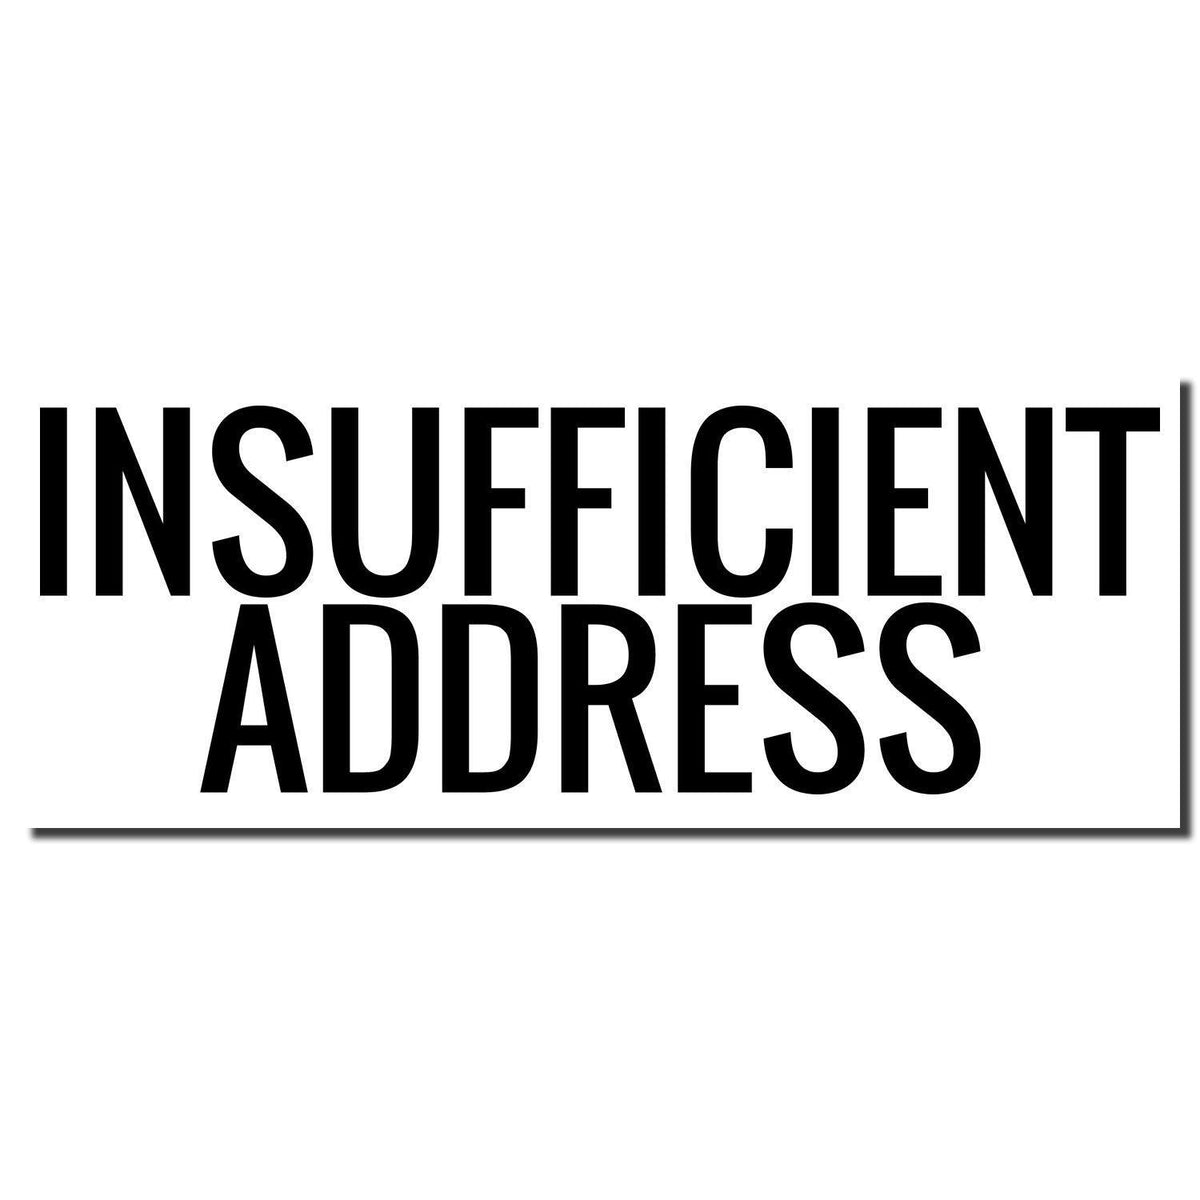 Enlarged Imprint Insufficient Address Rubber Stamp Sample